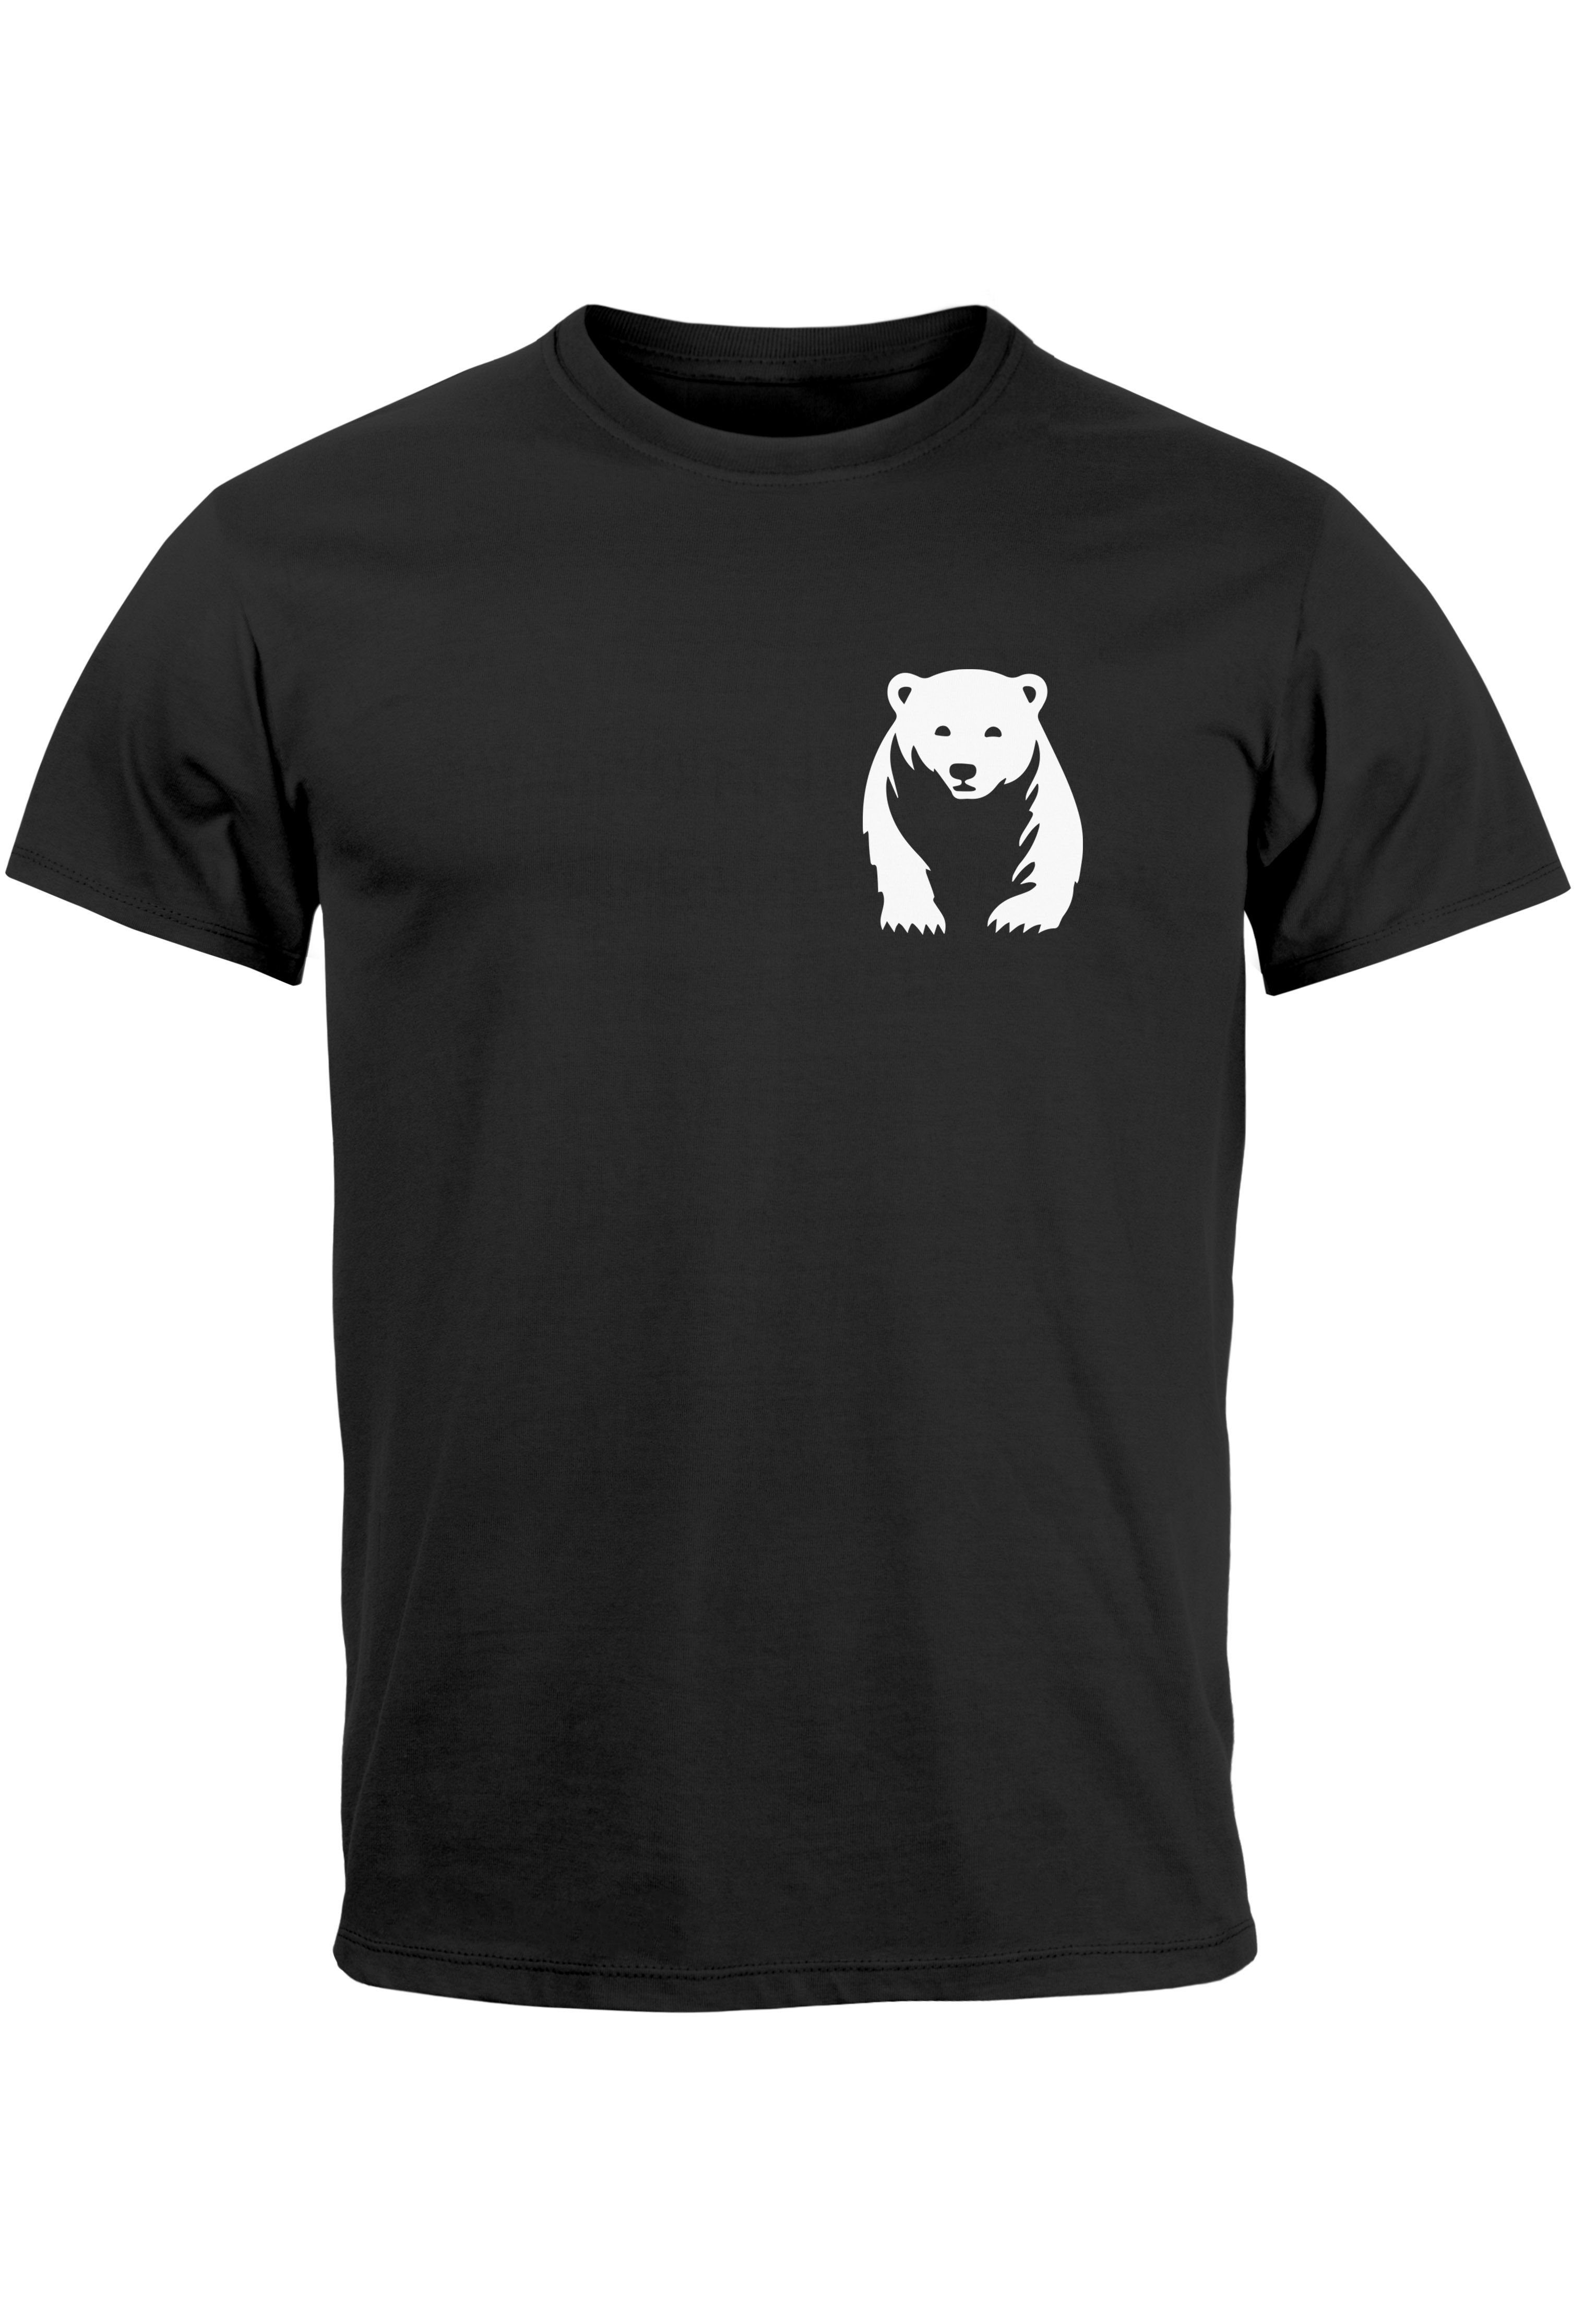 Neverless Print-Shirt Herren T-Shirt Aufdruck Brustprint Logo Bär Natur Outdoor Fashion Stre mit Print schwarz